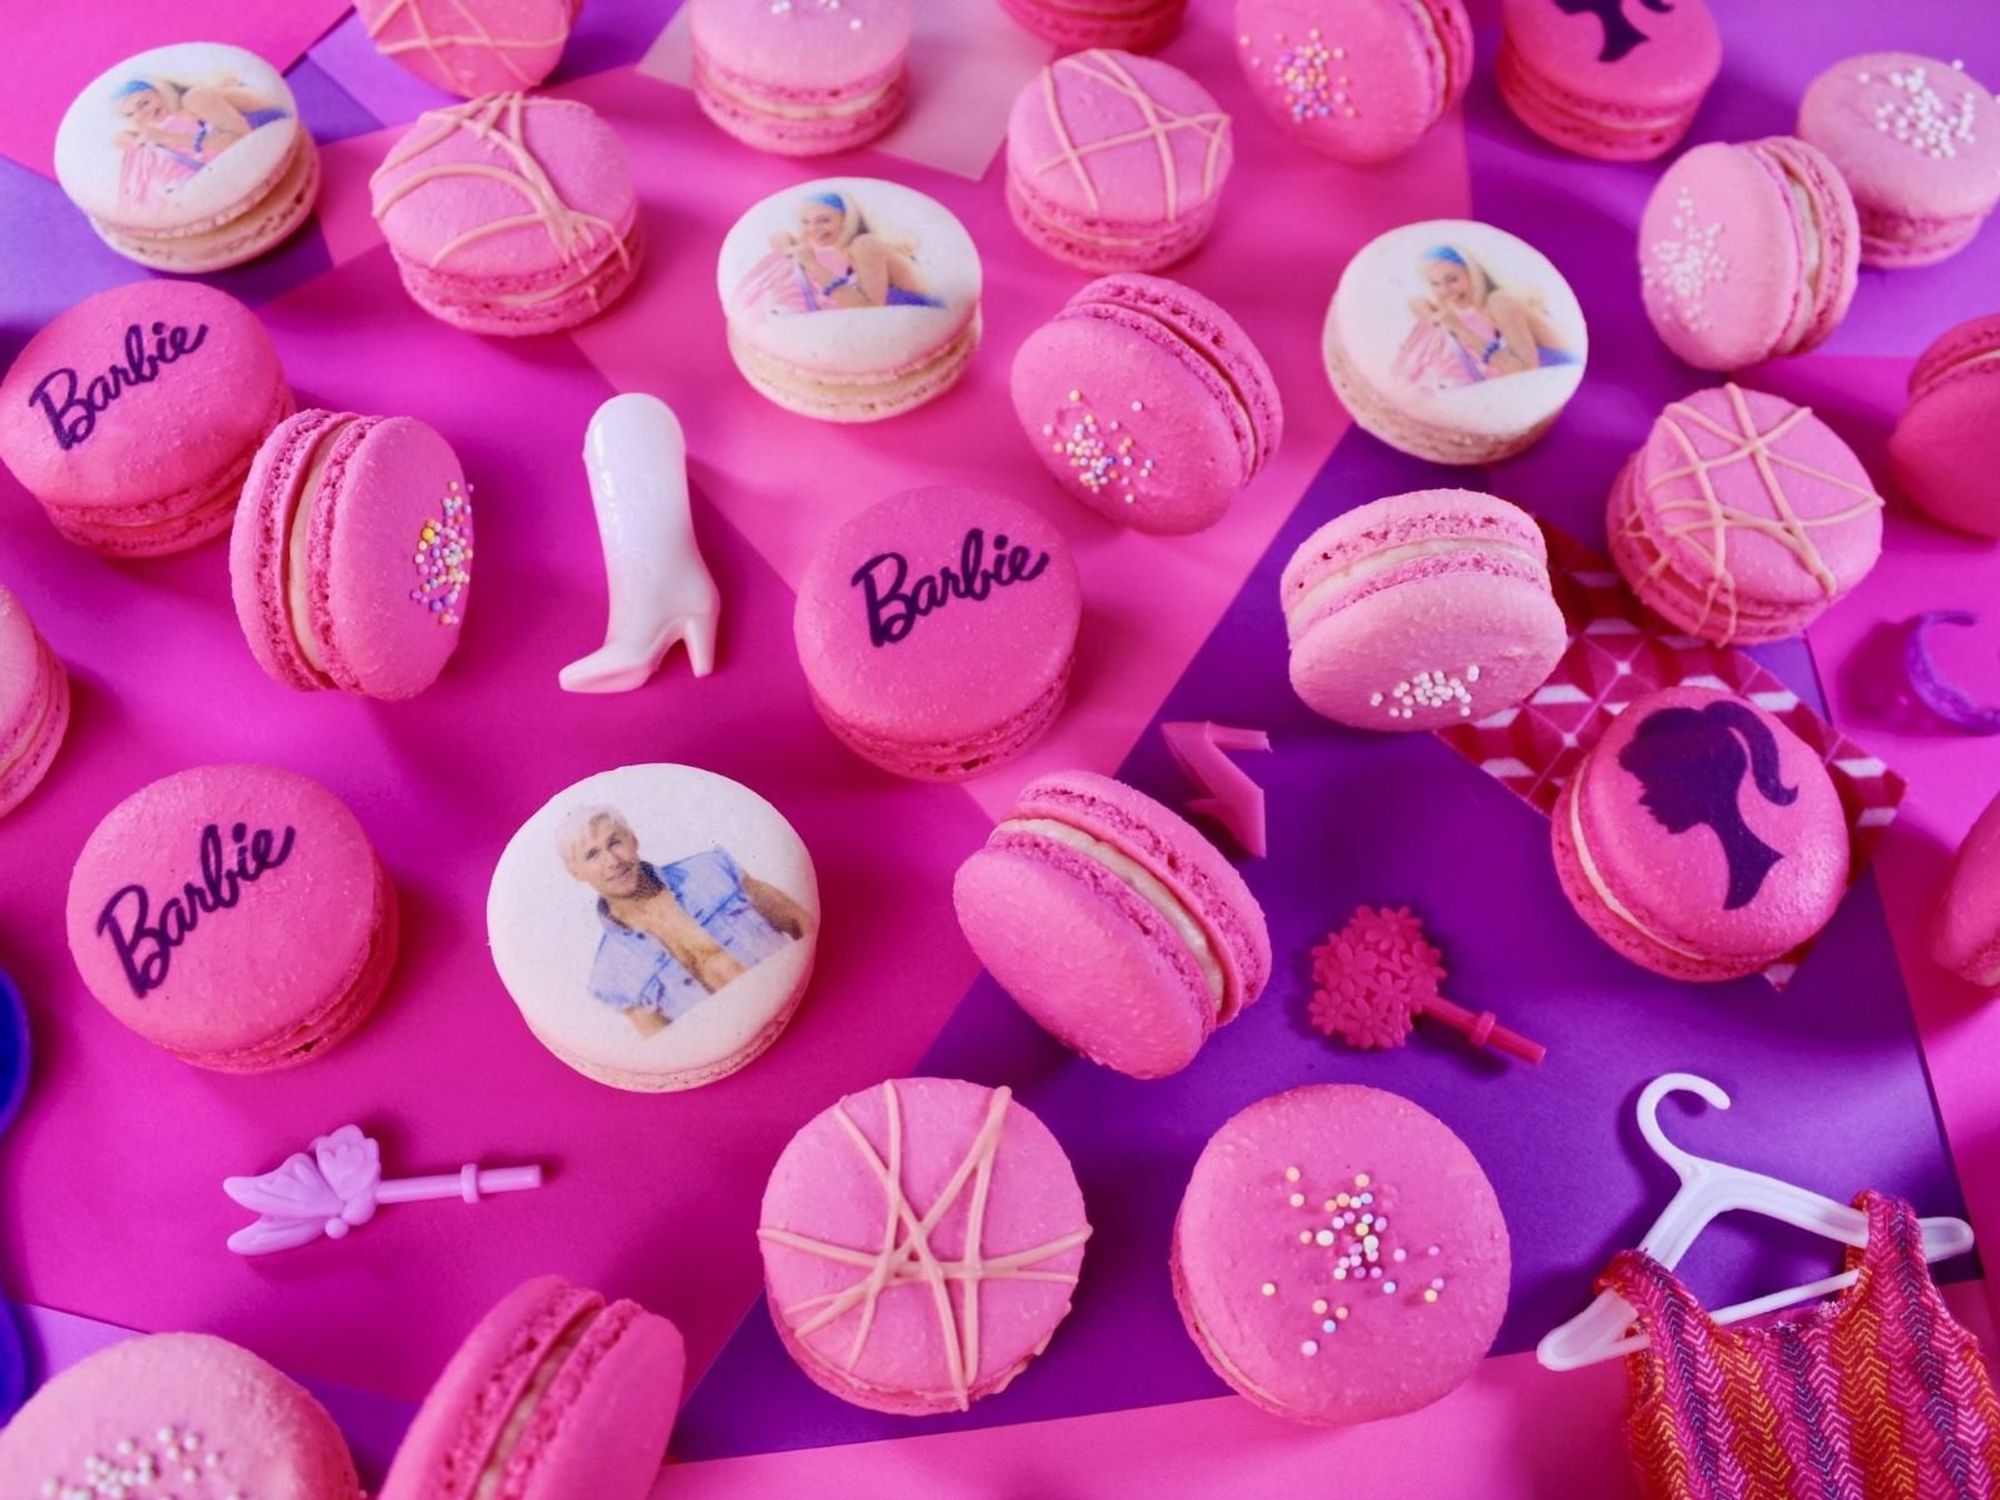 Barbie Glam Birthday Party Ideas, Photo 1 of 23